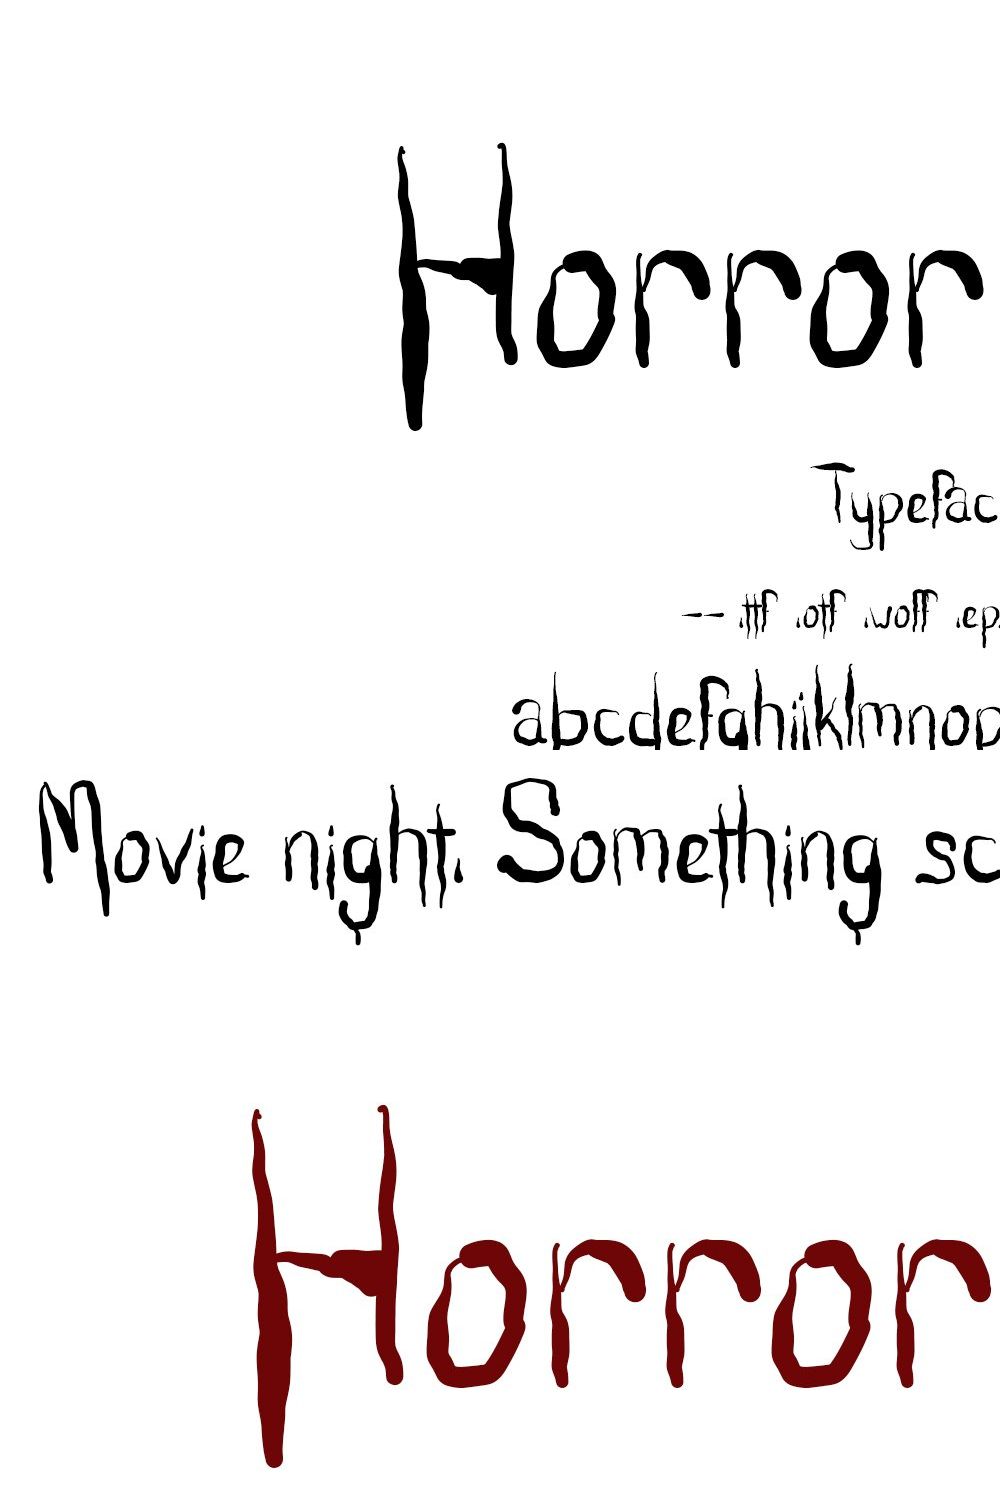 Font Horror Flick Creepy Halloween pinterest preview image.